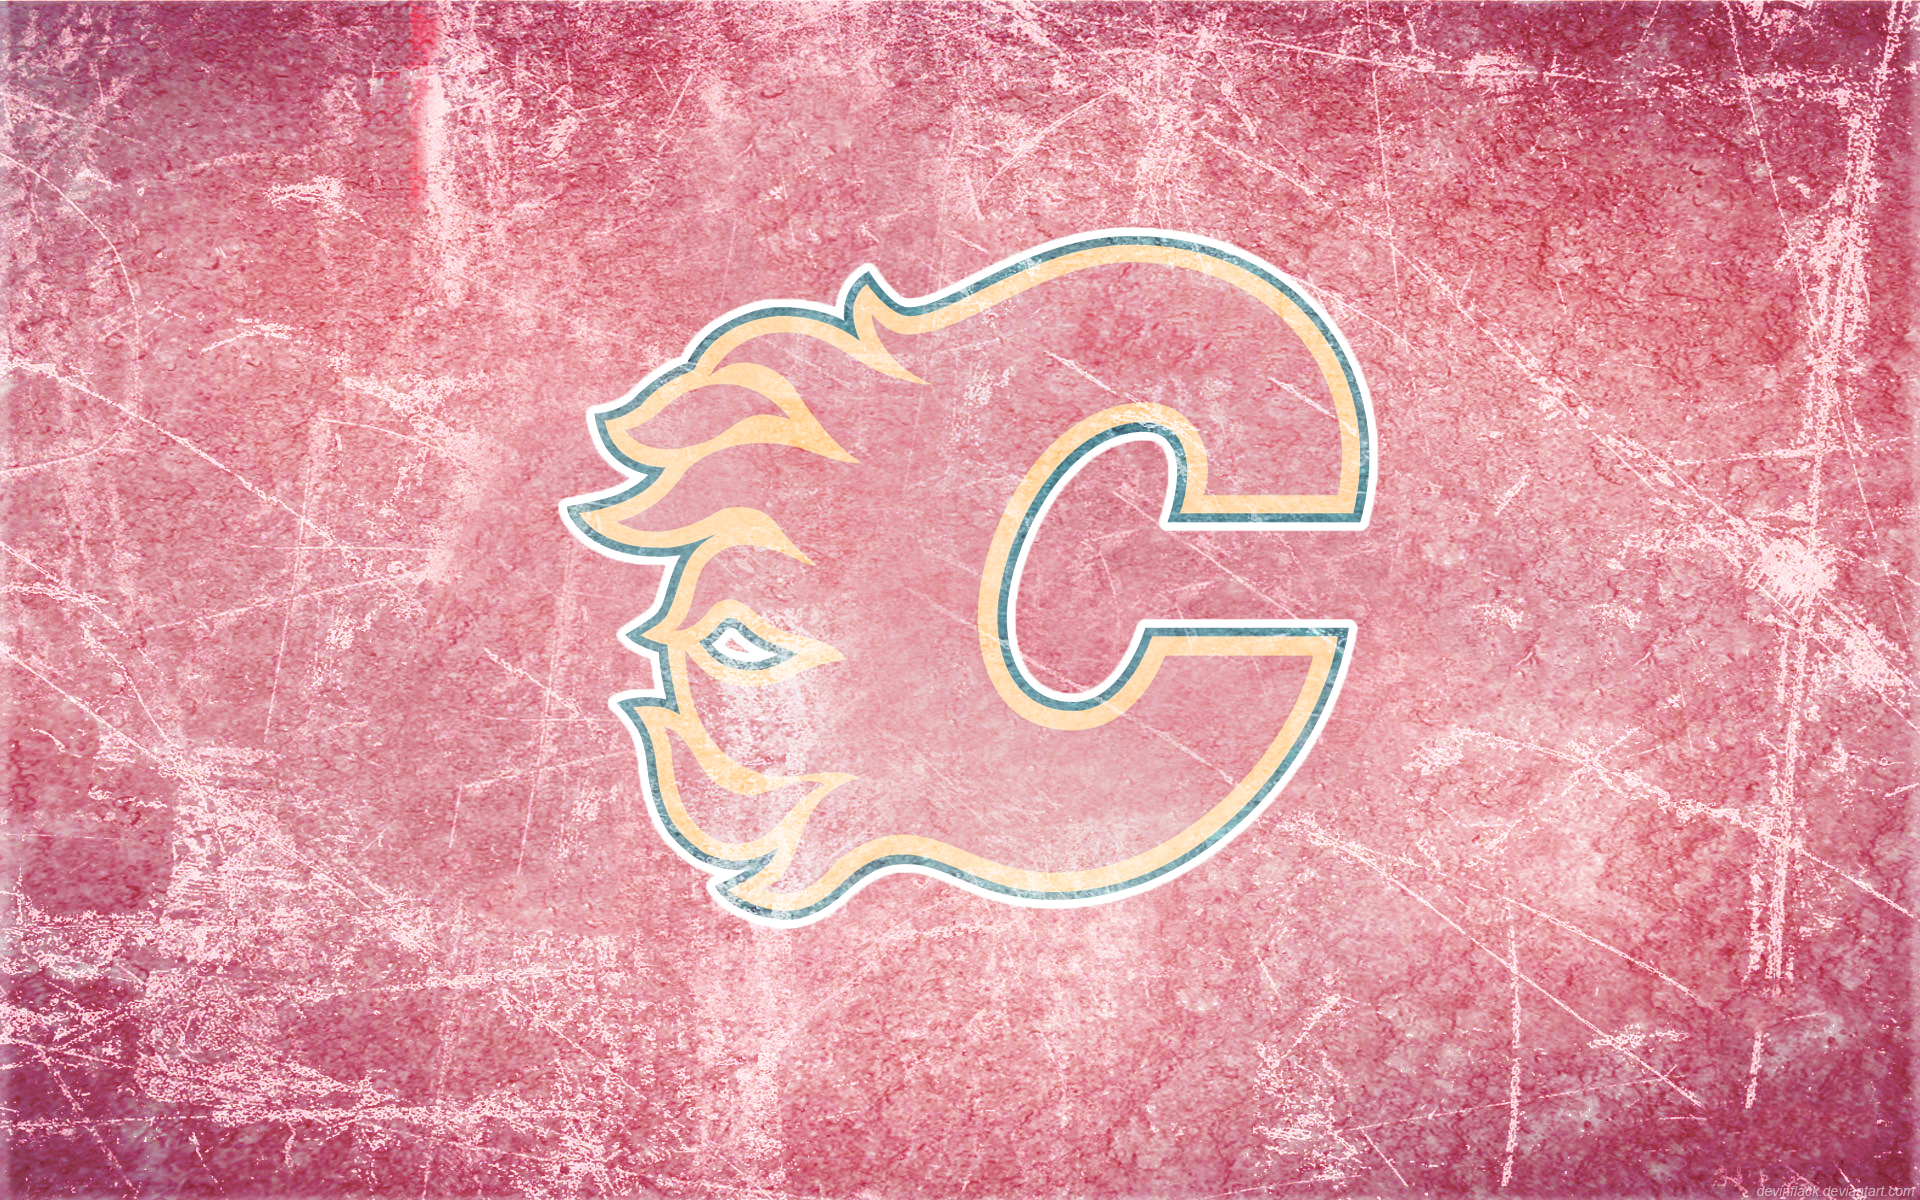 Calgary Flames League It To Us